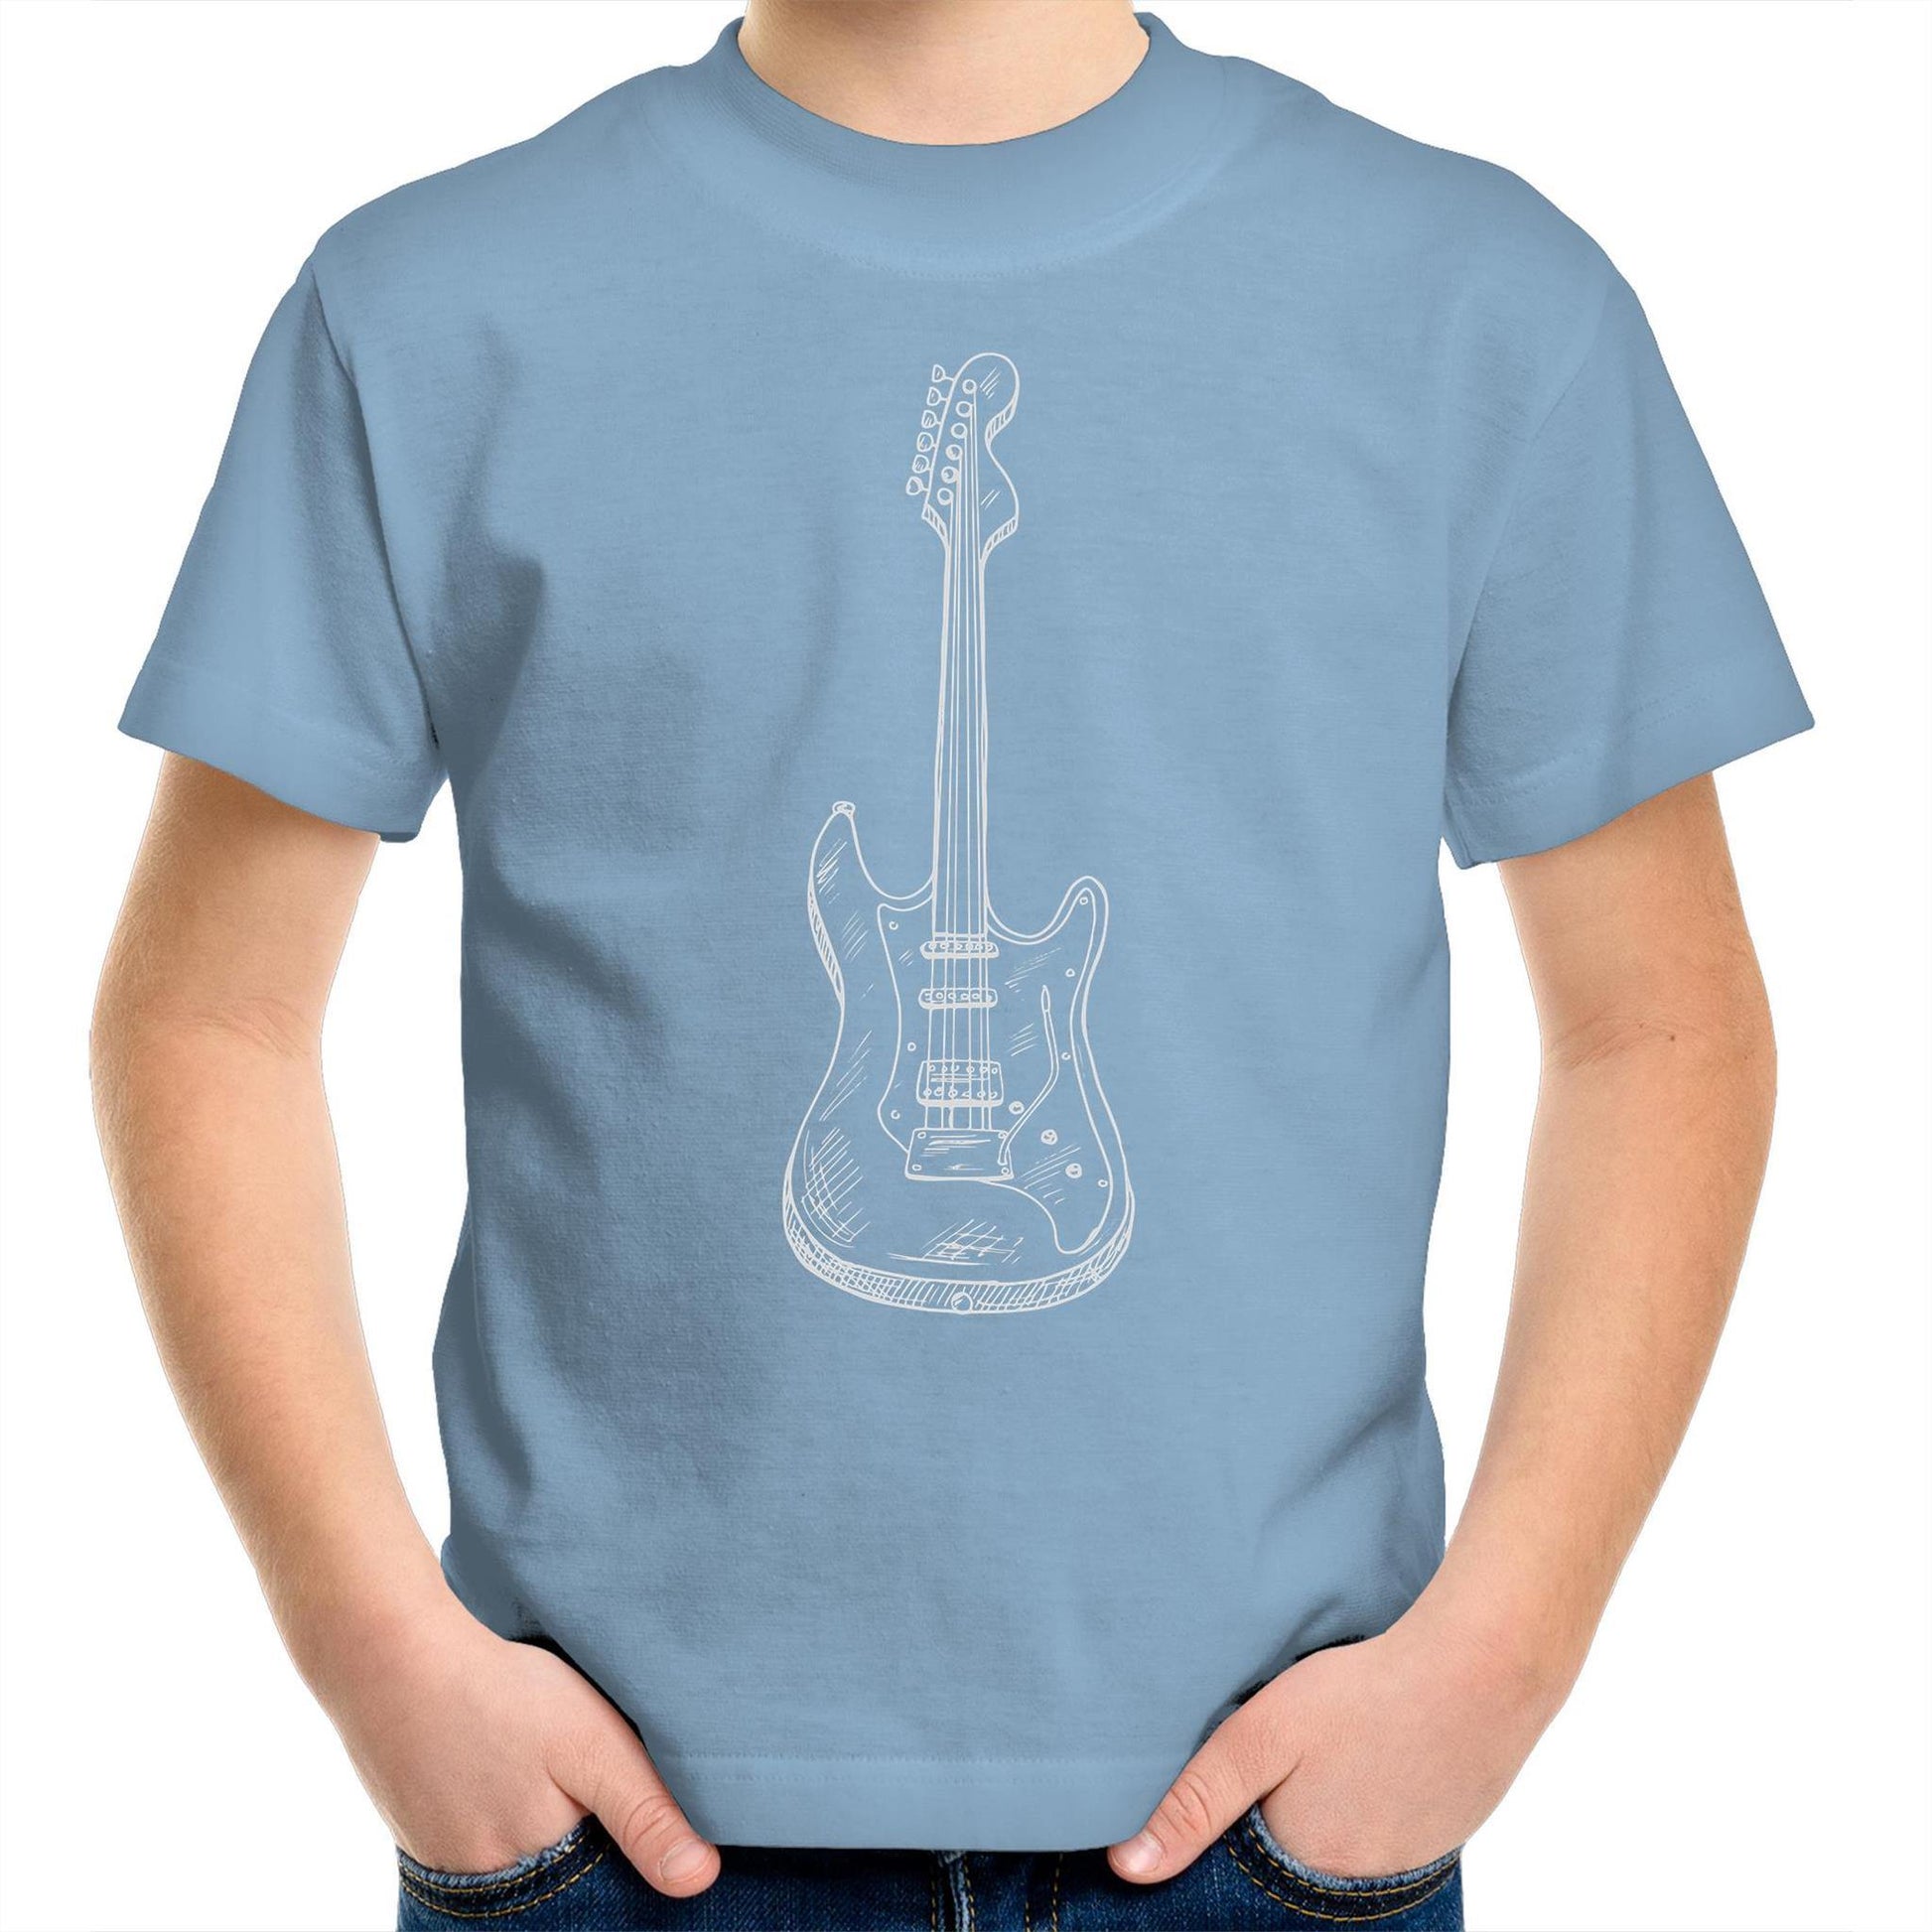 Guitar - Kids Youth Crew T-Shirt Carolina Blue Kids Youth T-shirt Music